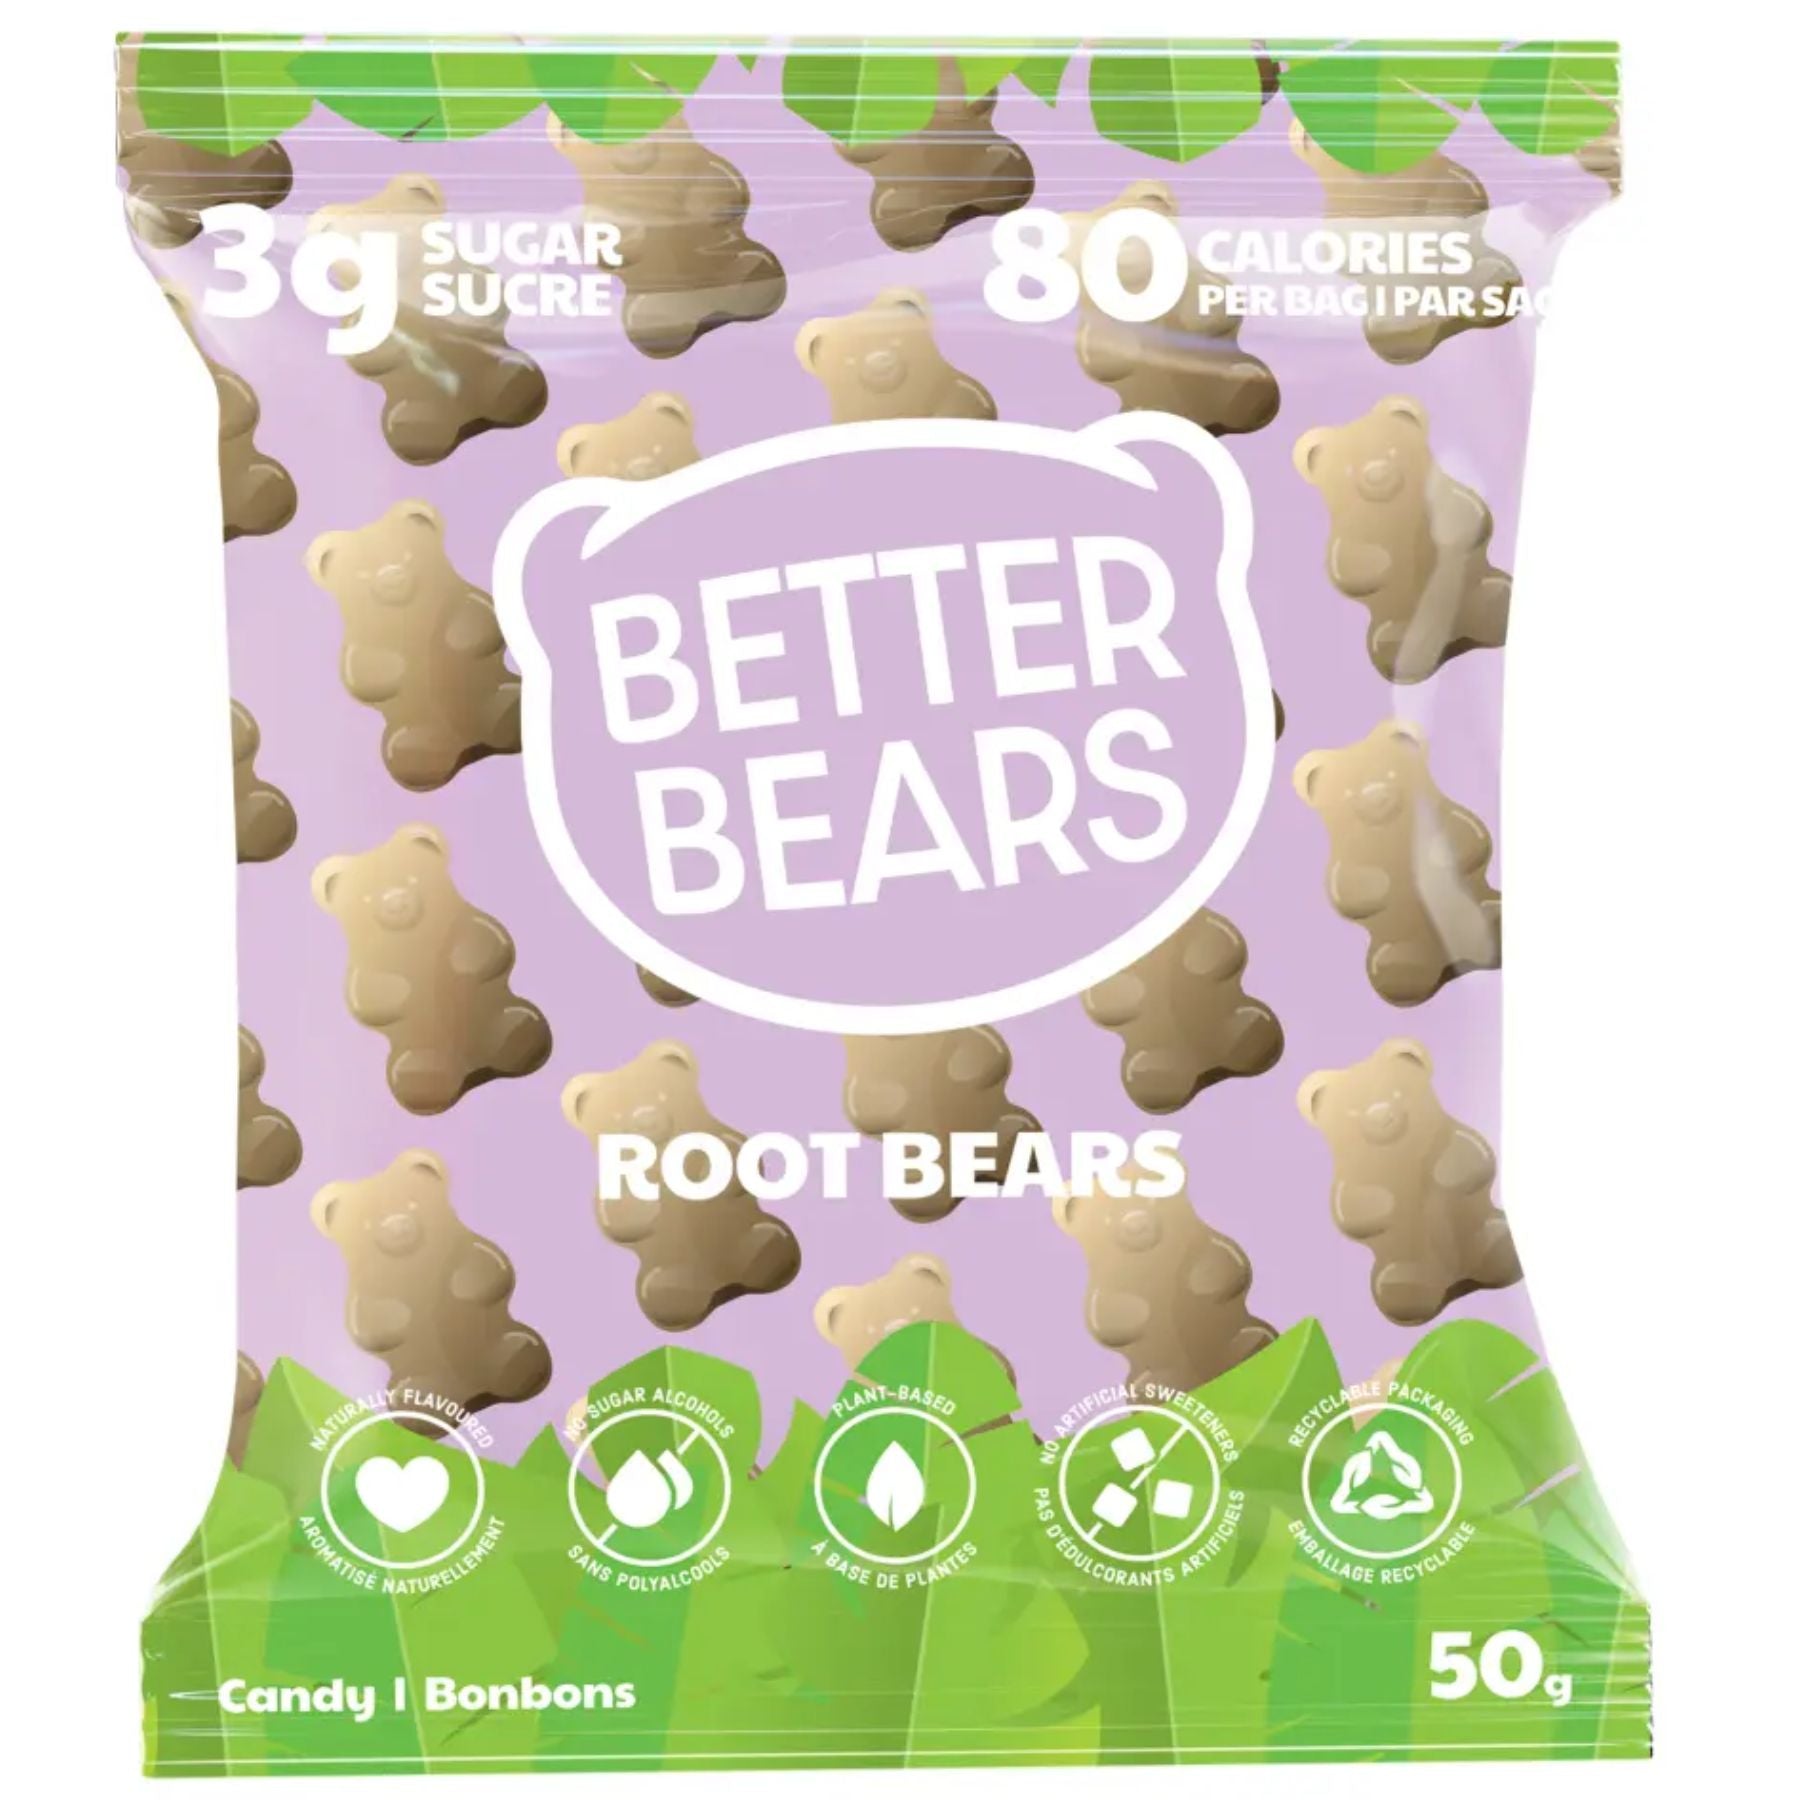 Better Bears Root Bears Vegan Gummies 50g